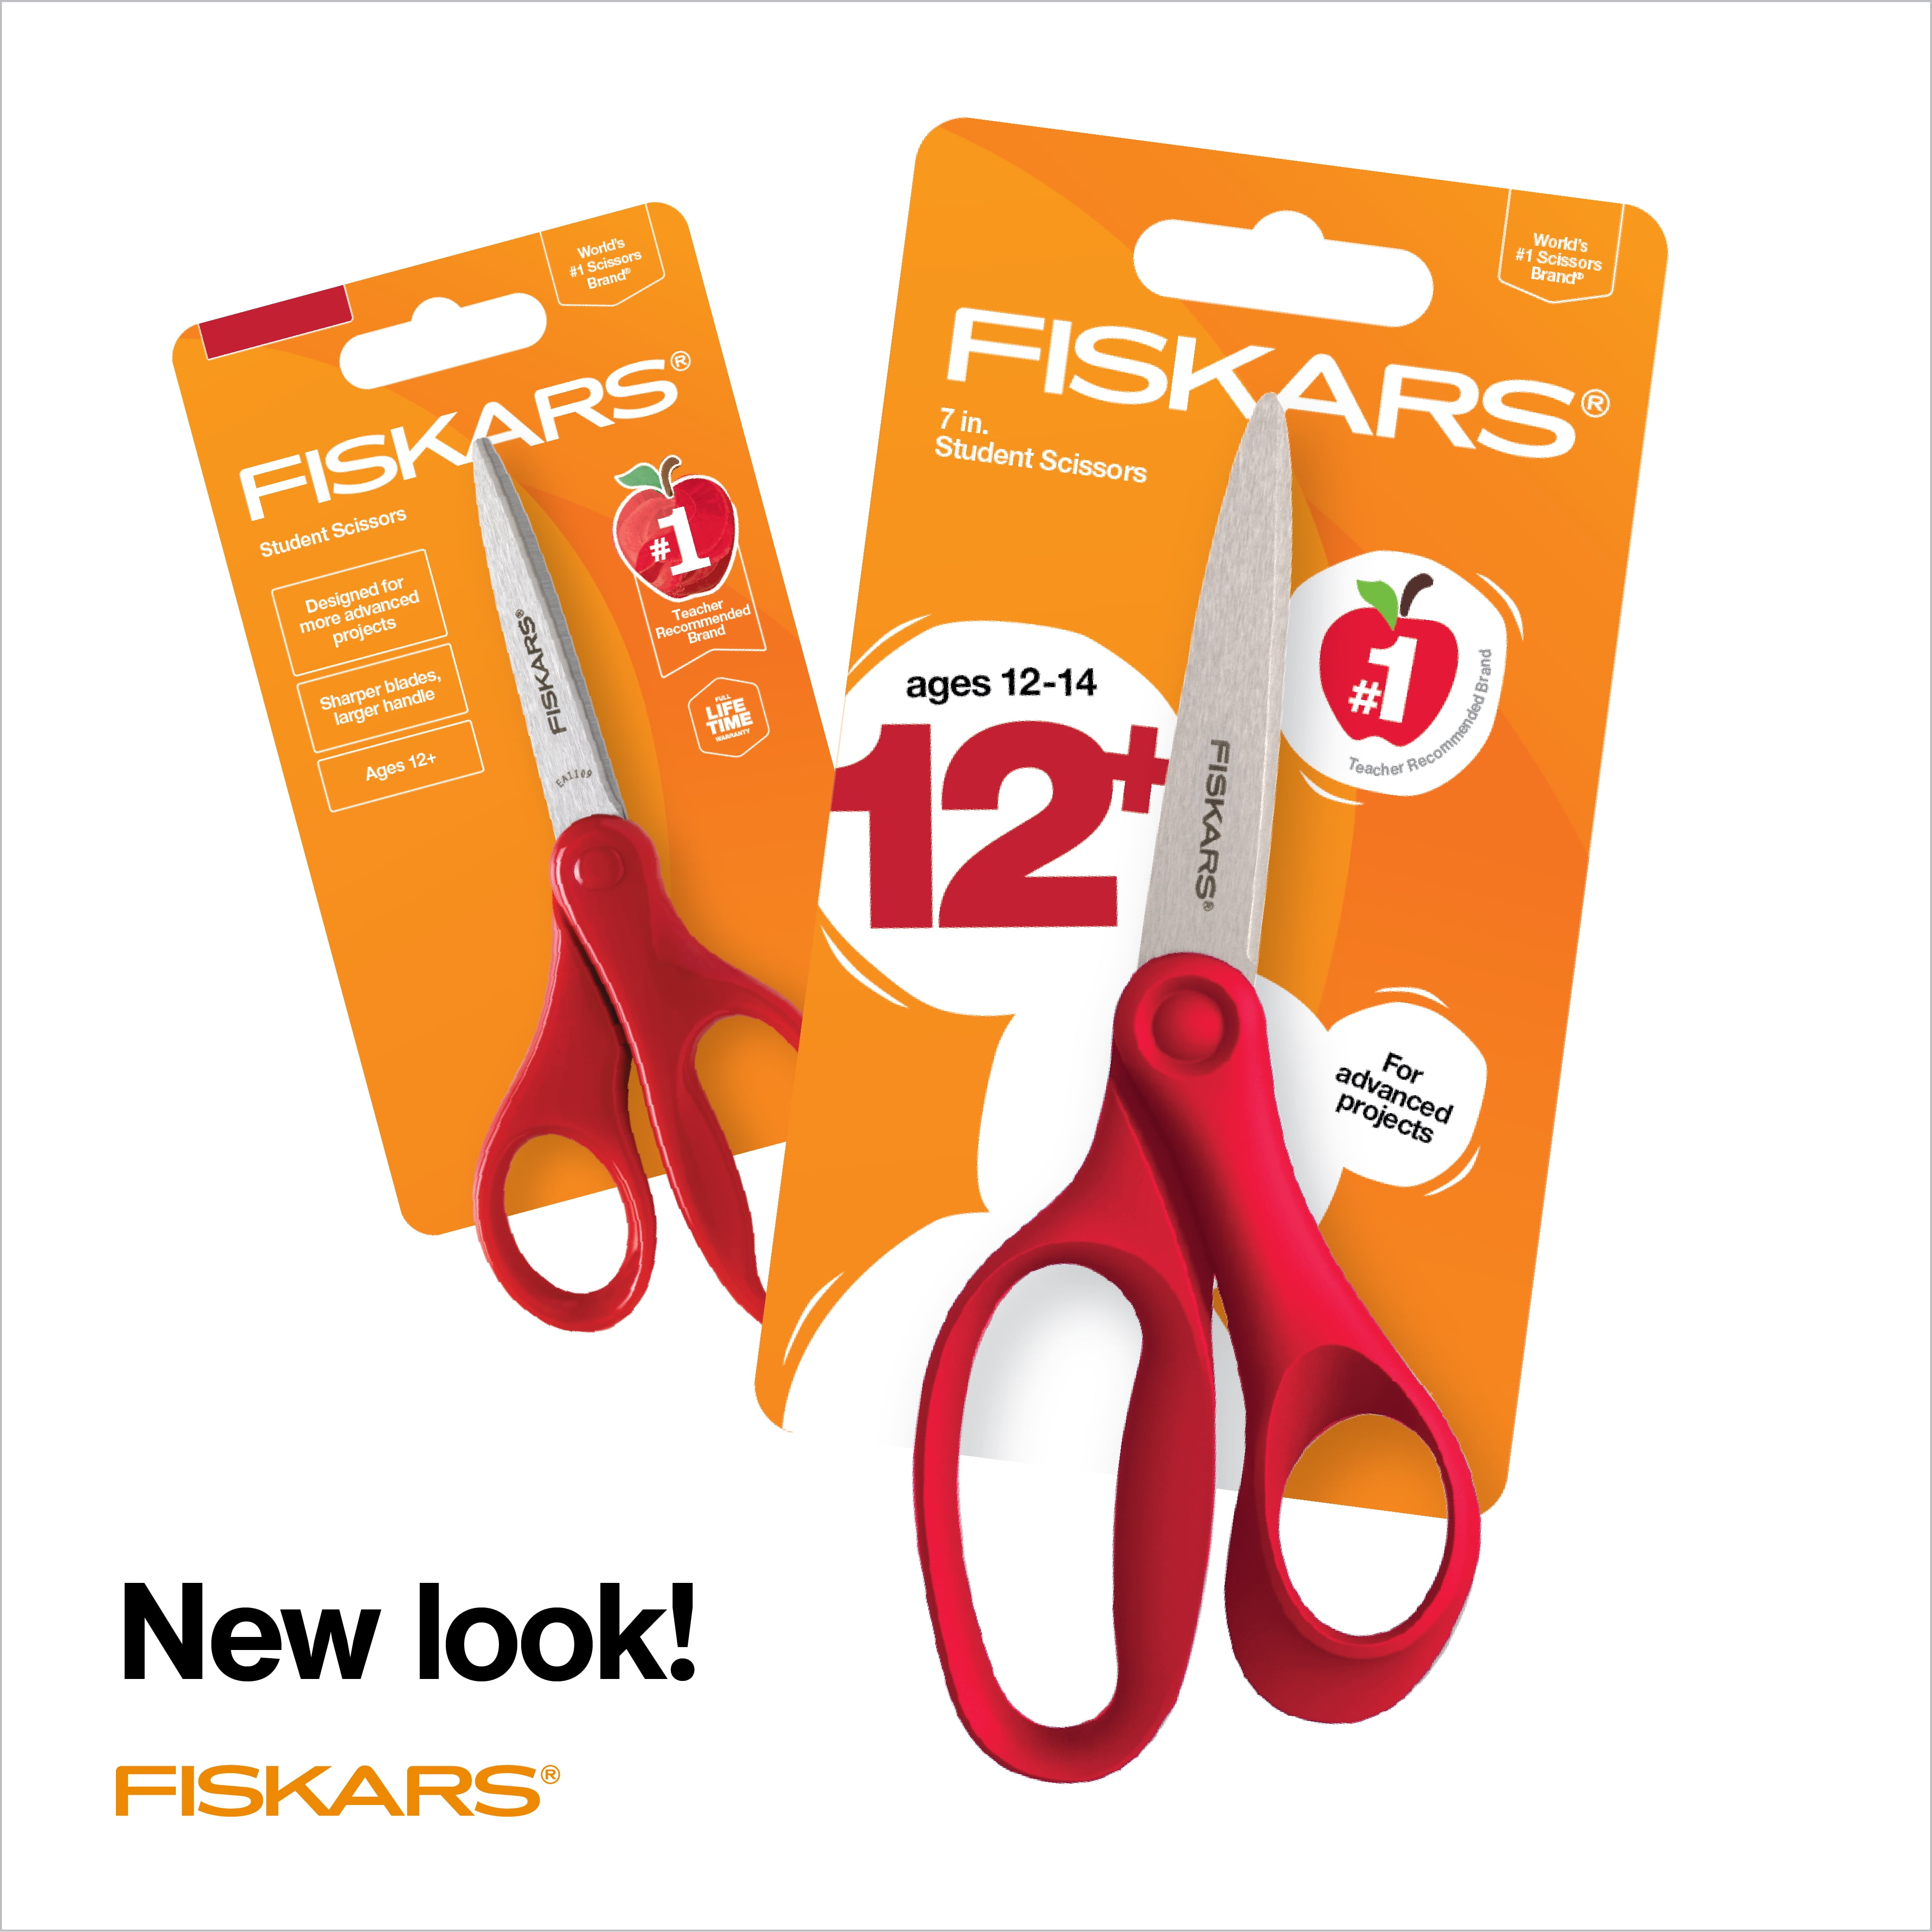  Fiskars Schoolworks 153520-1004 Back to School Supplies, Kids  Scissors Bulk Blunt-tip, 5 Inch, 12 Pack, Red/Blue : Toys & Games